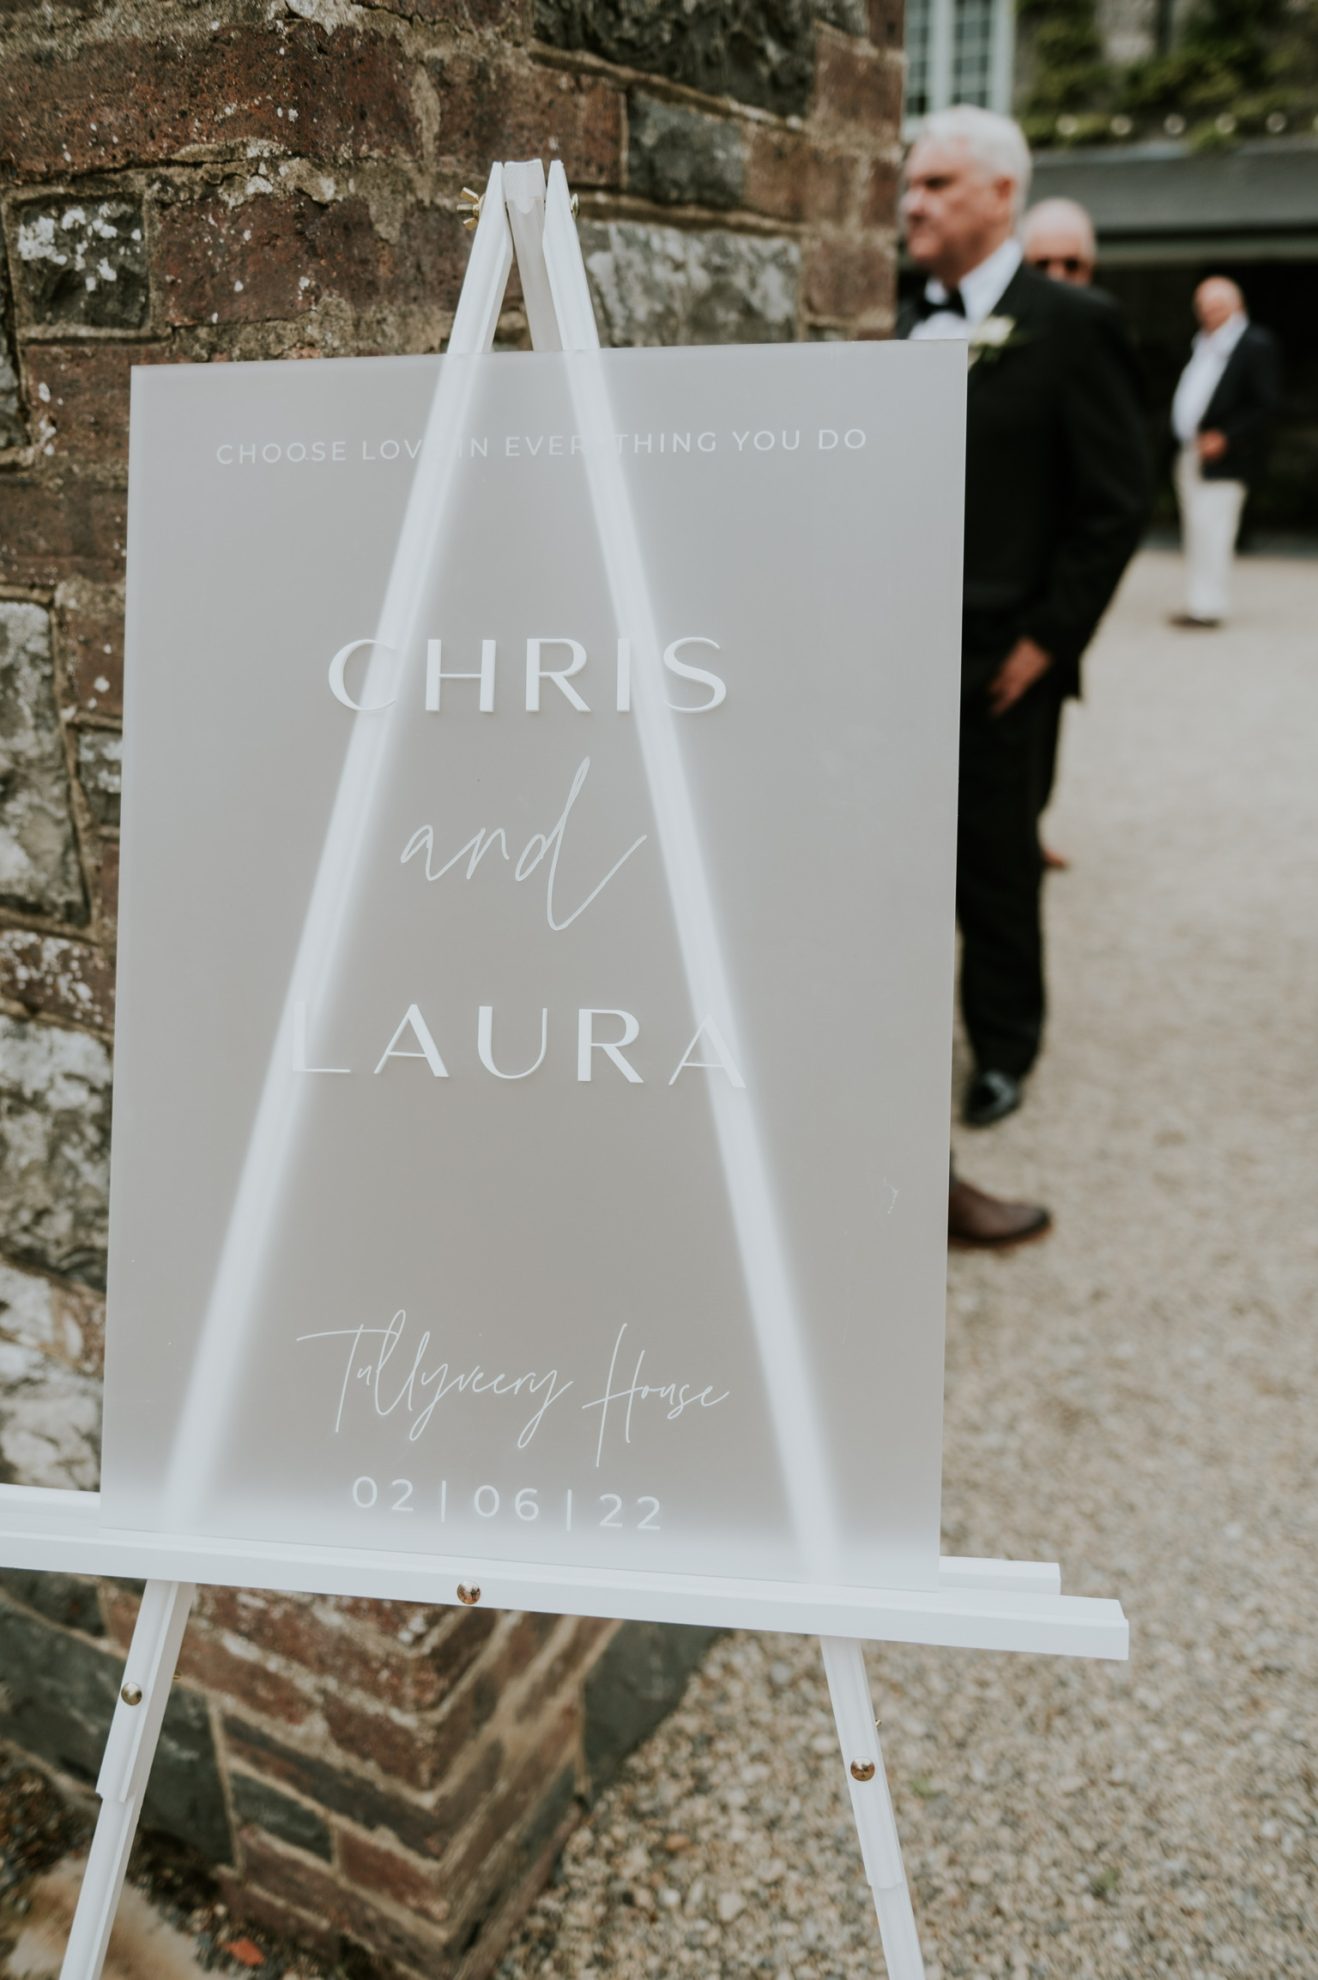 Wedding Signage at laura 7 chris' Wedding